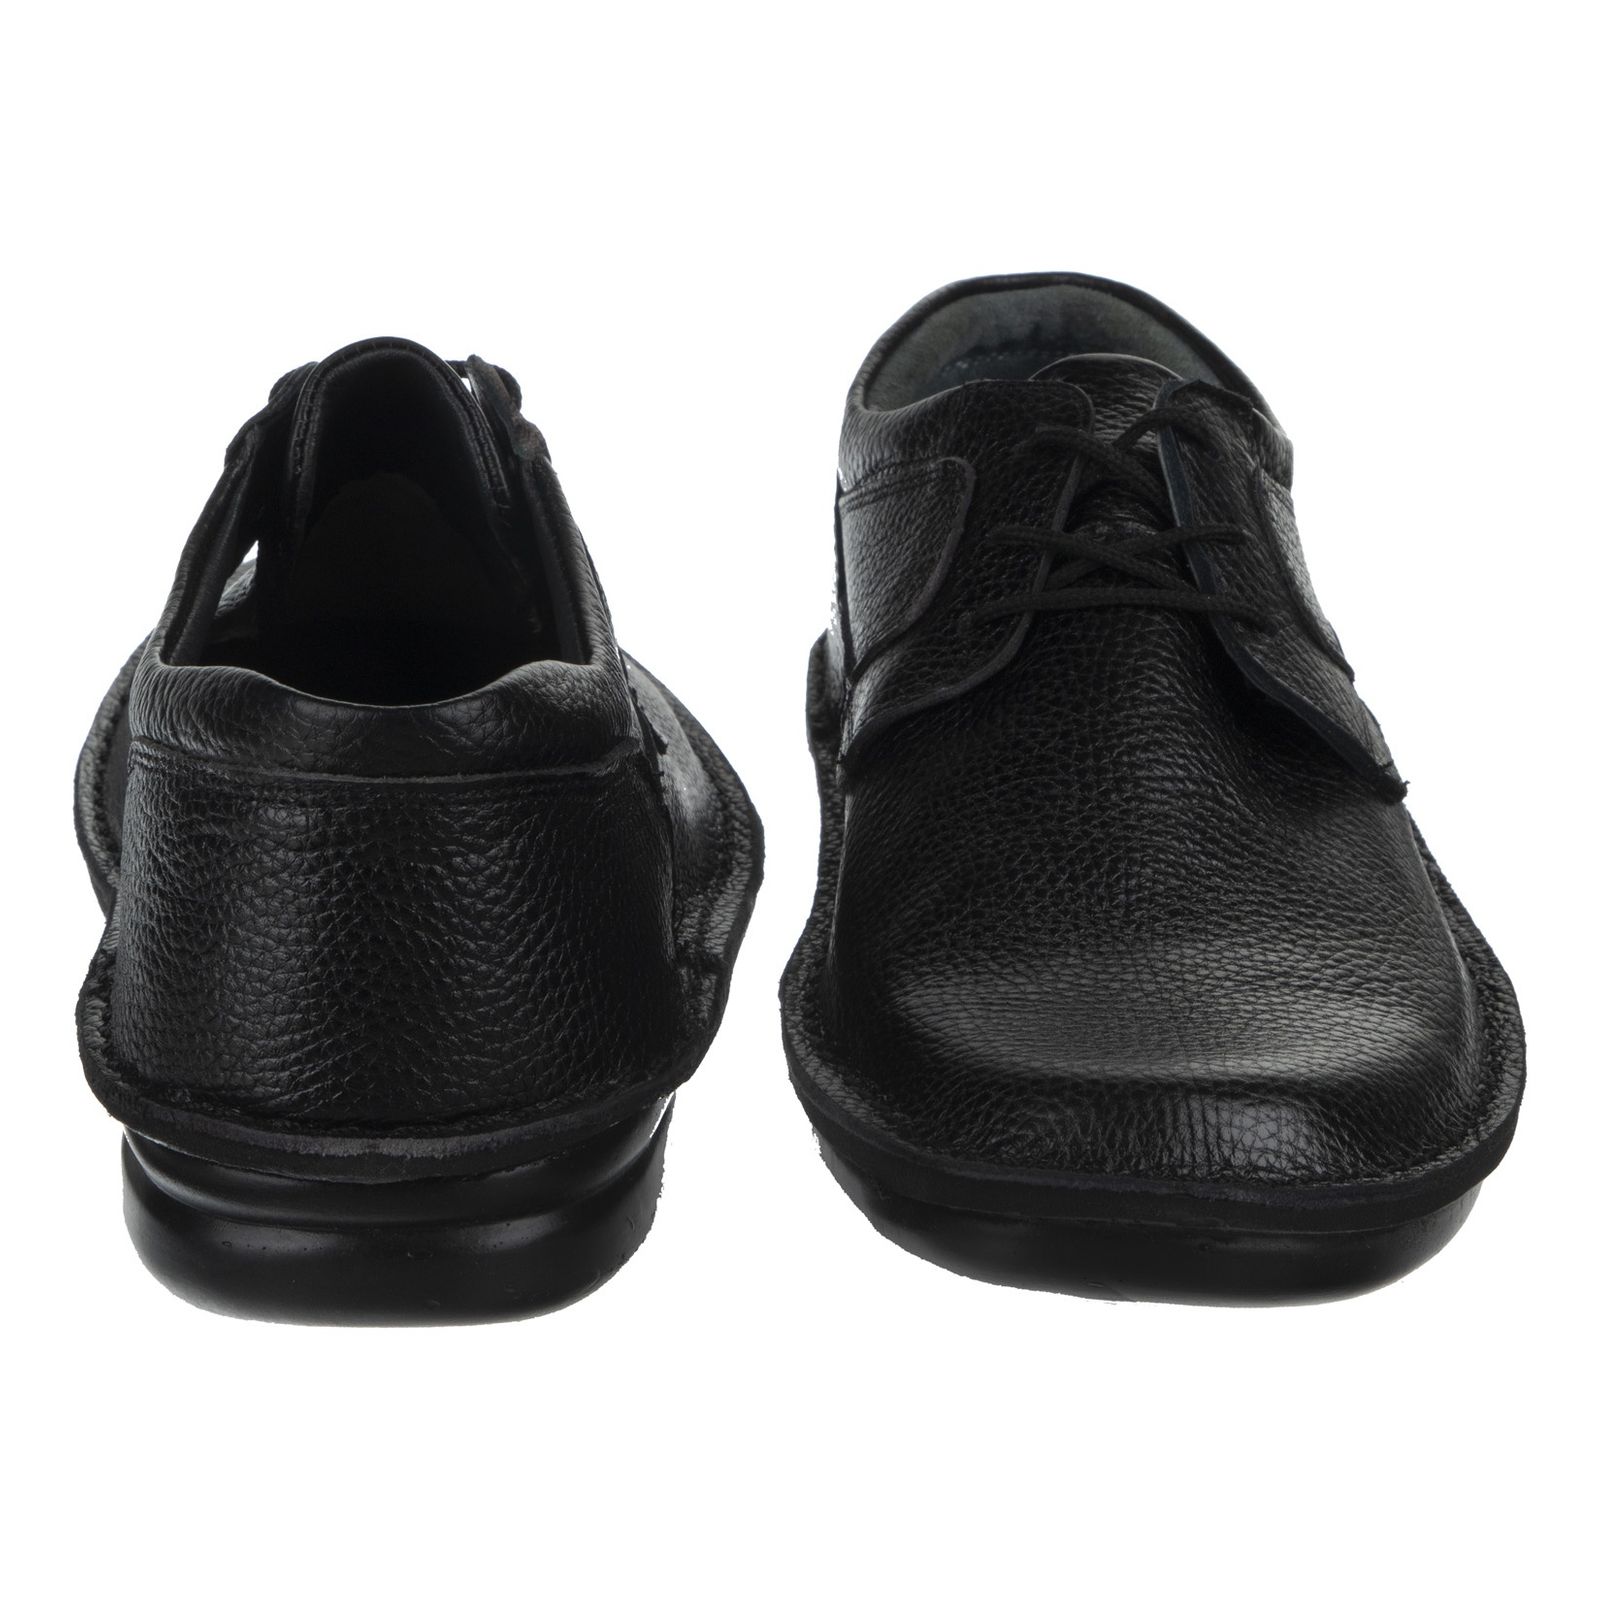 کفش روزمره مردانه شیفر مدل 7011A-101 - مشکی - 4